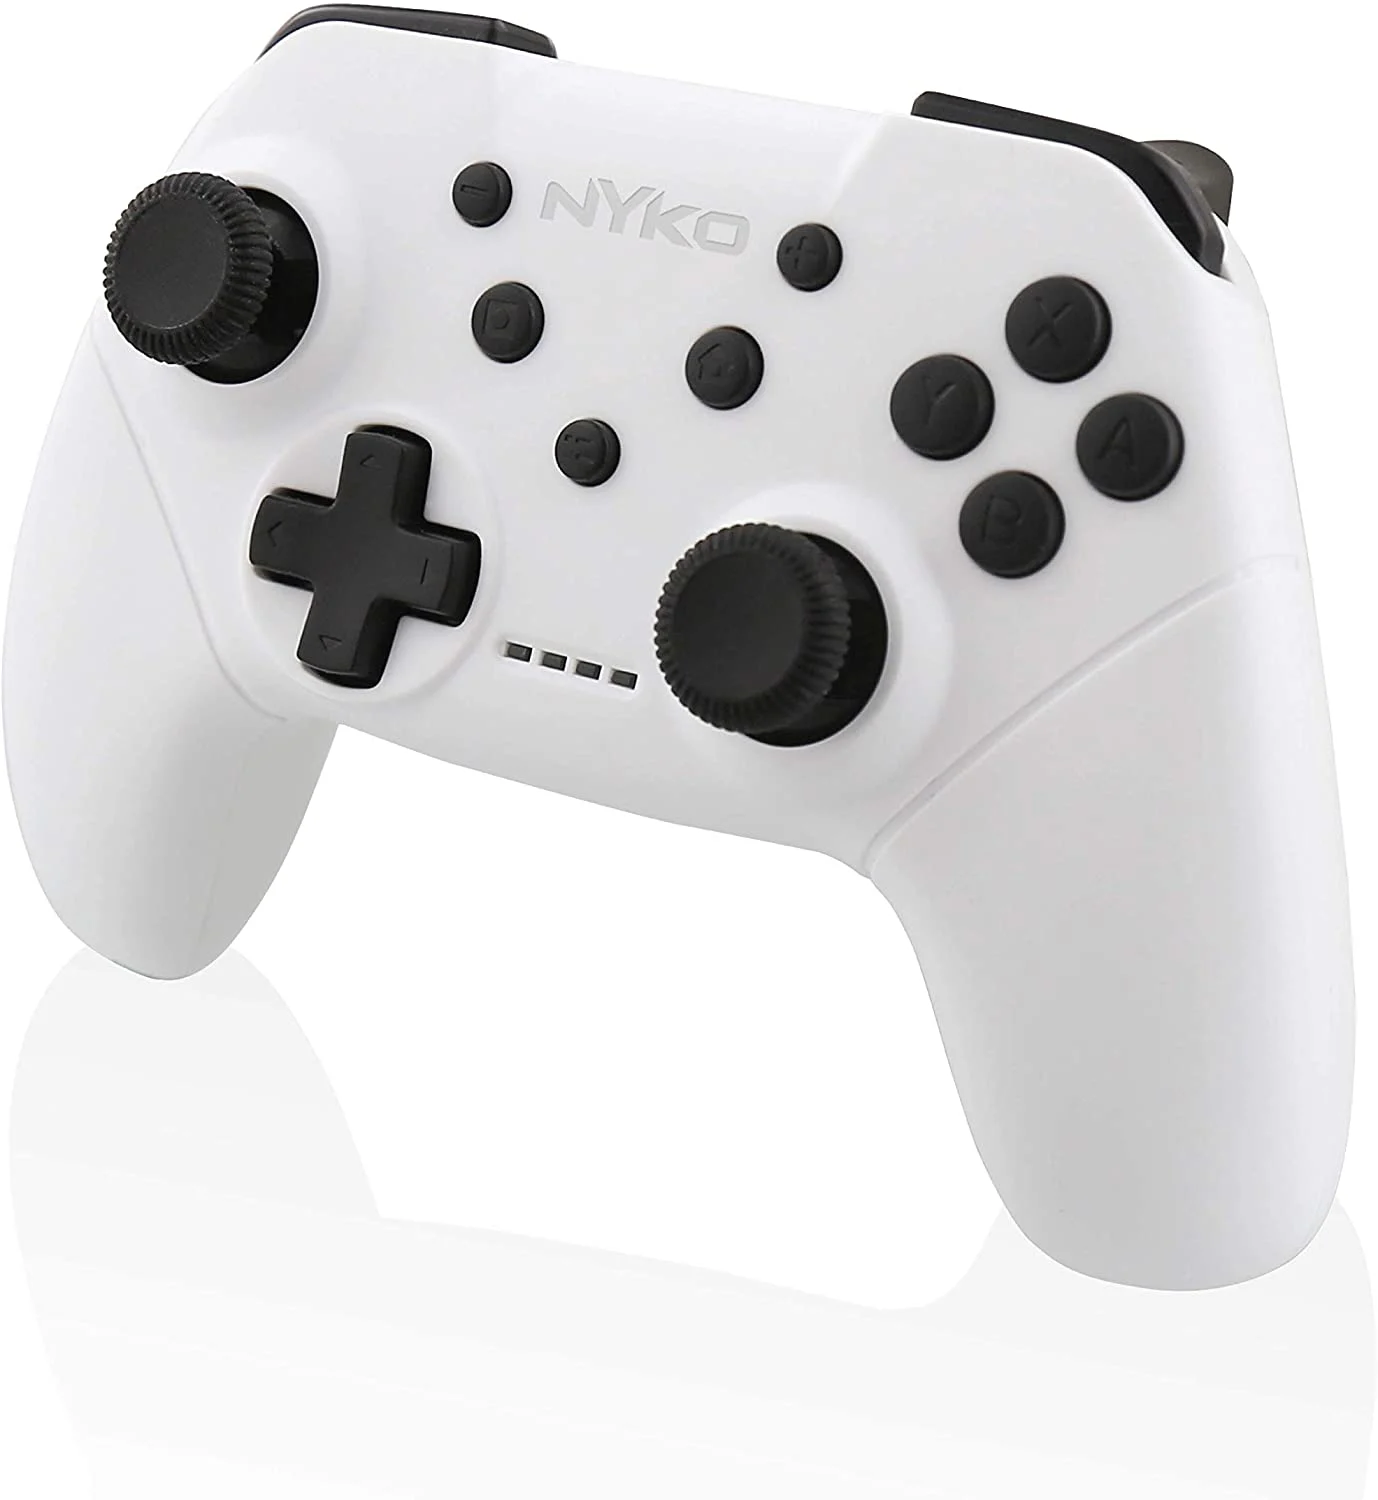 Controle Nyko Core Mini Wireless para Nintendo Switch - Branco (87283)